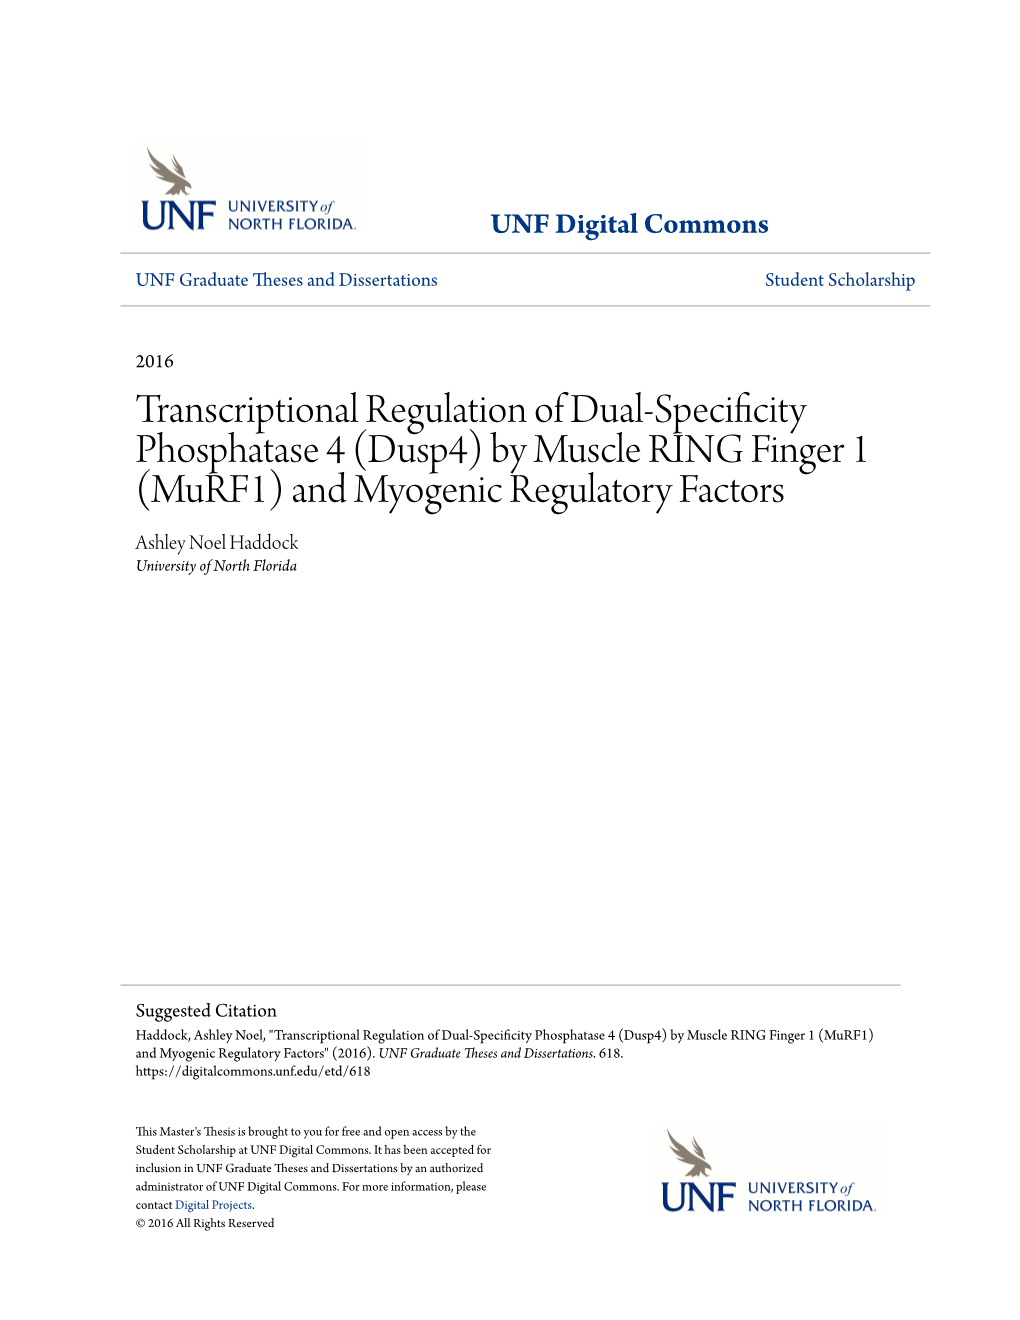 Transcriptional Regulation of Dual-Specificity Phosphatase 4